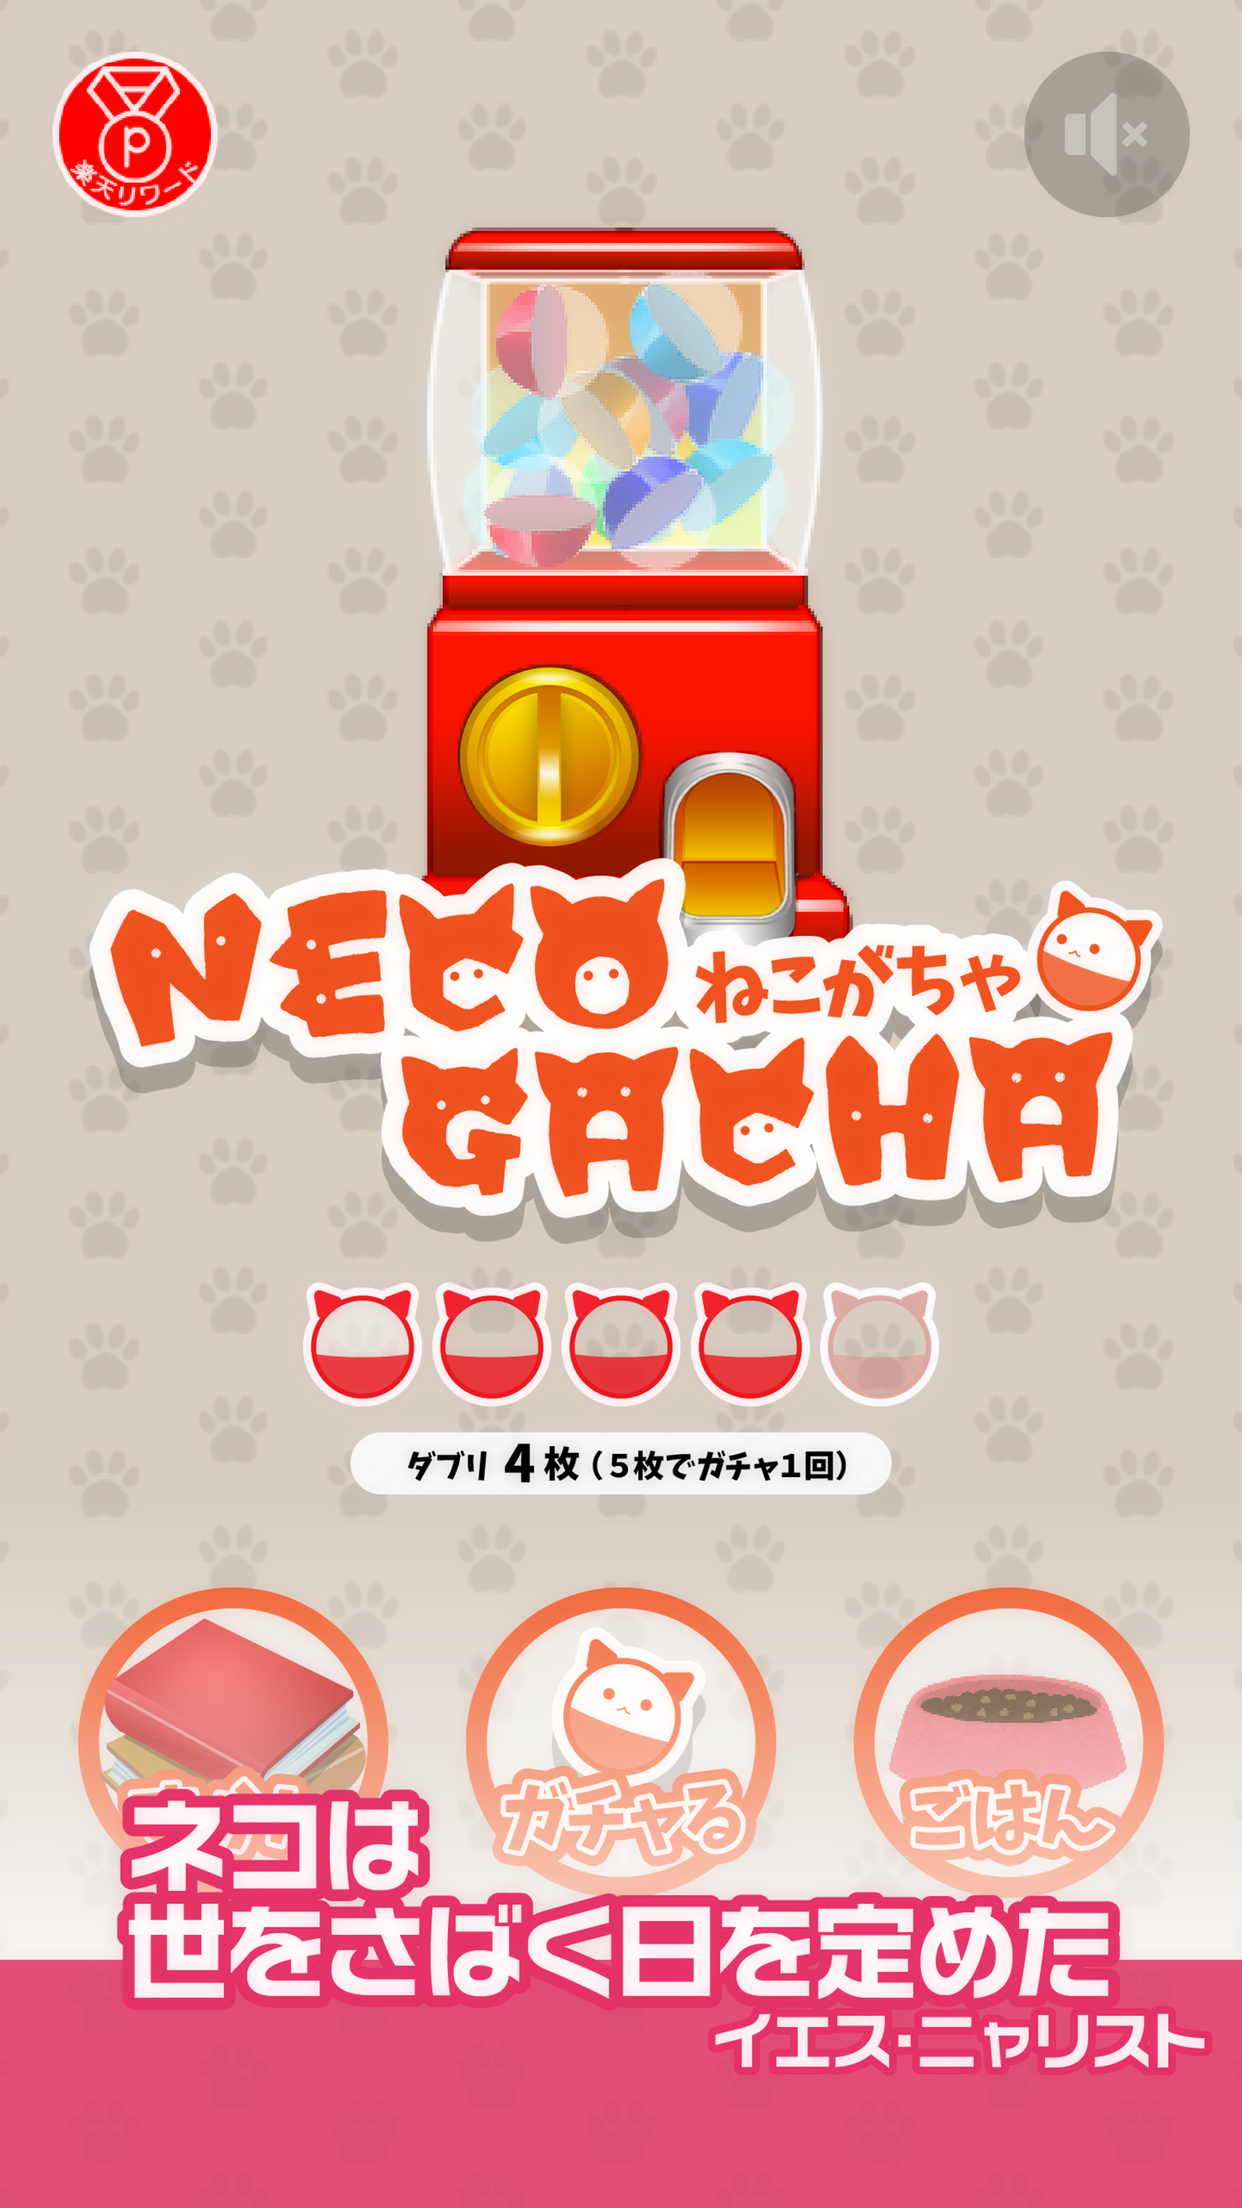 Screenshot 1 of Neko Aru Aru Gacha เกม gacha ที่ไม่ได้ใช้งานฟรี 1.04